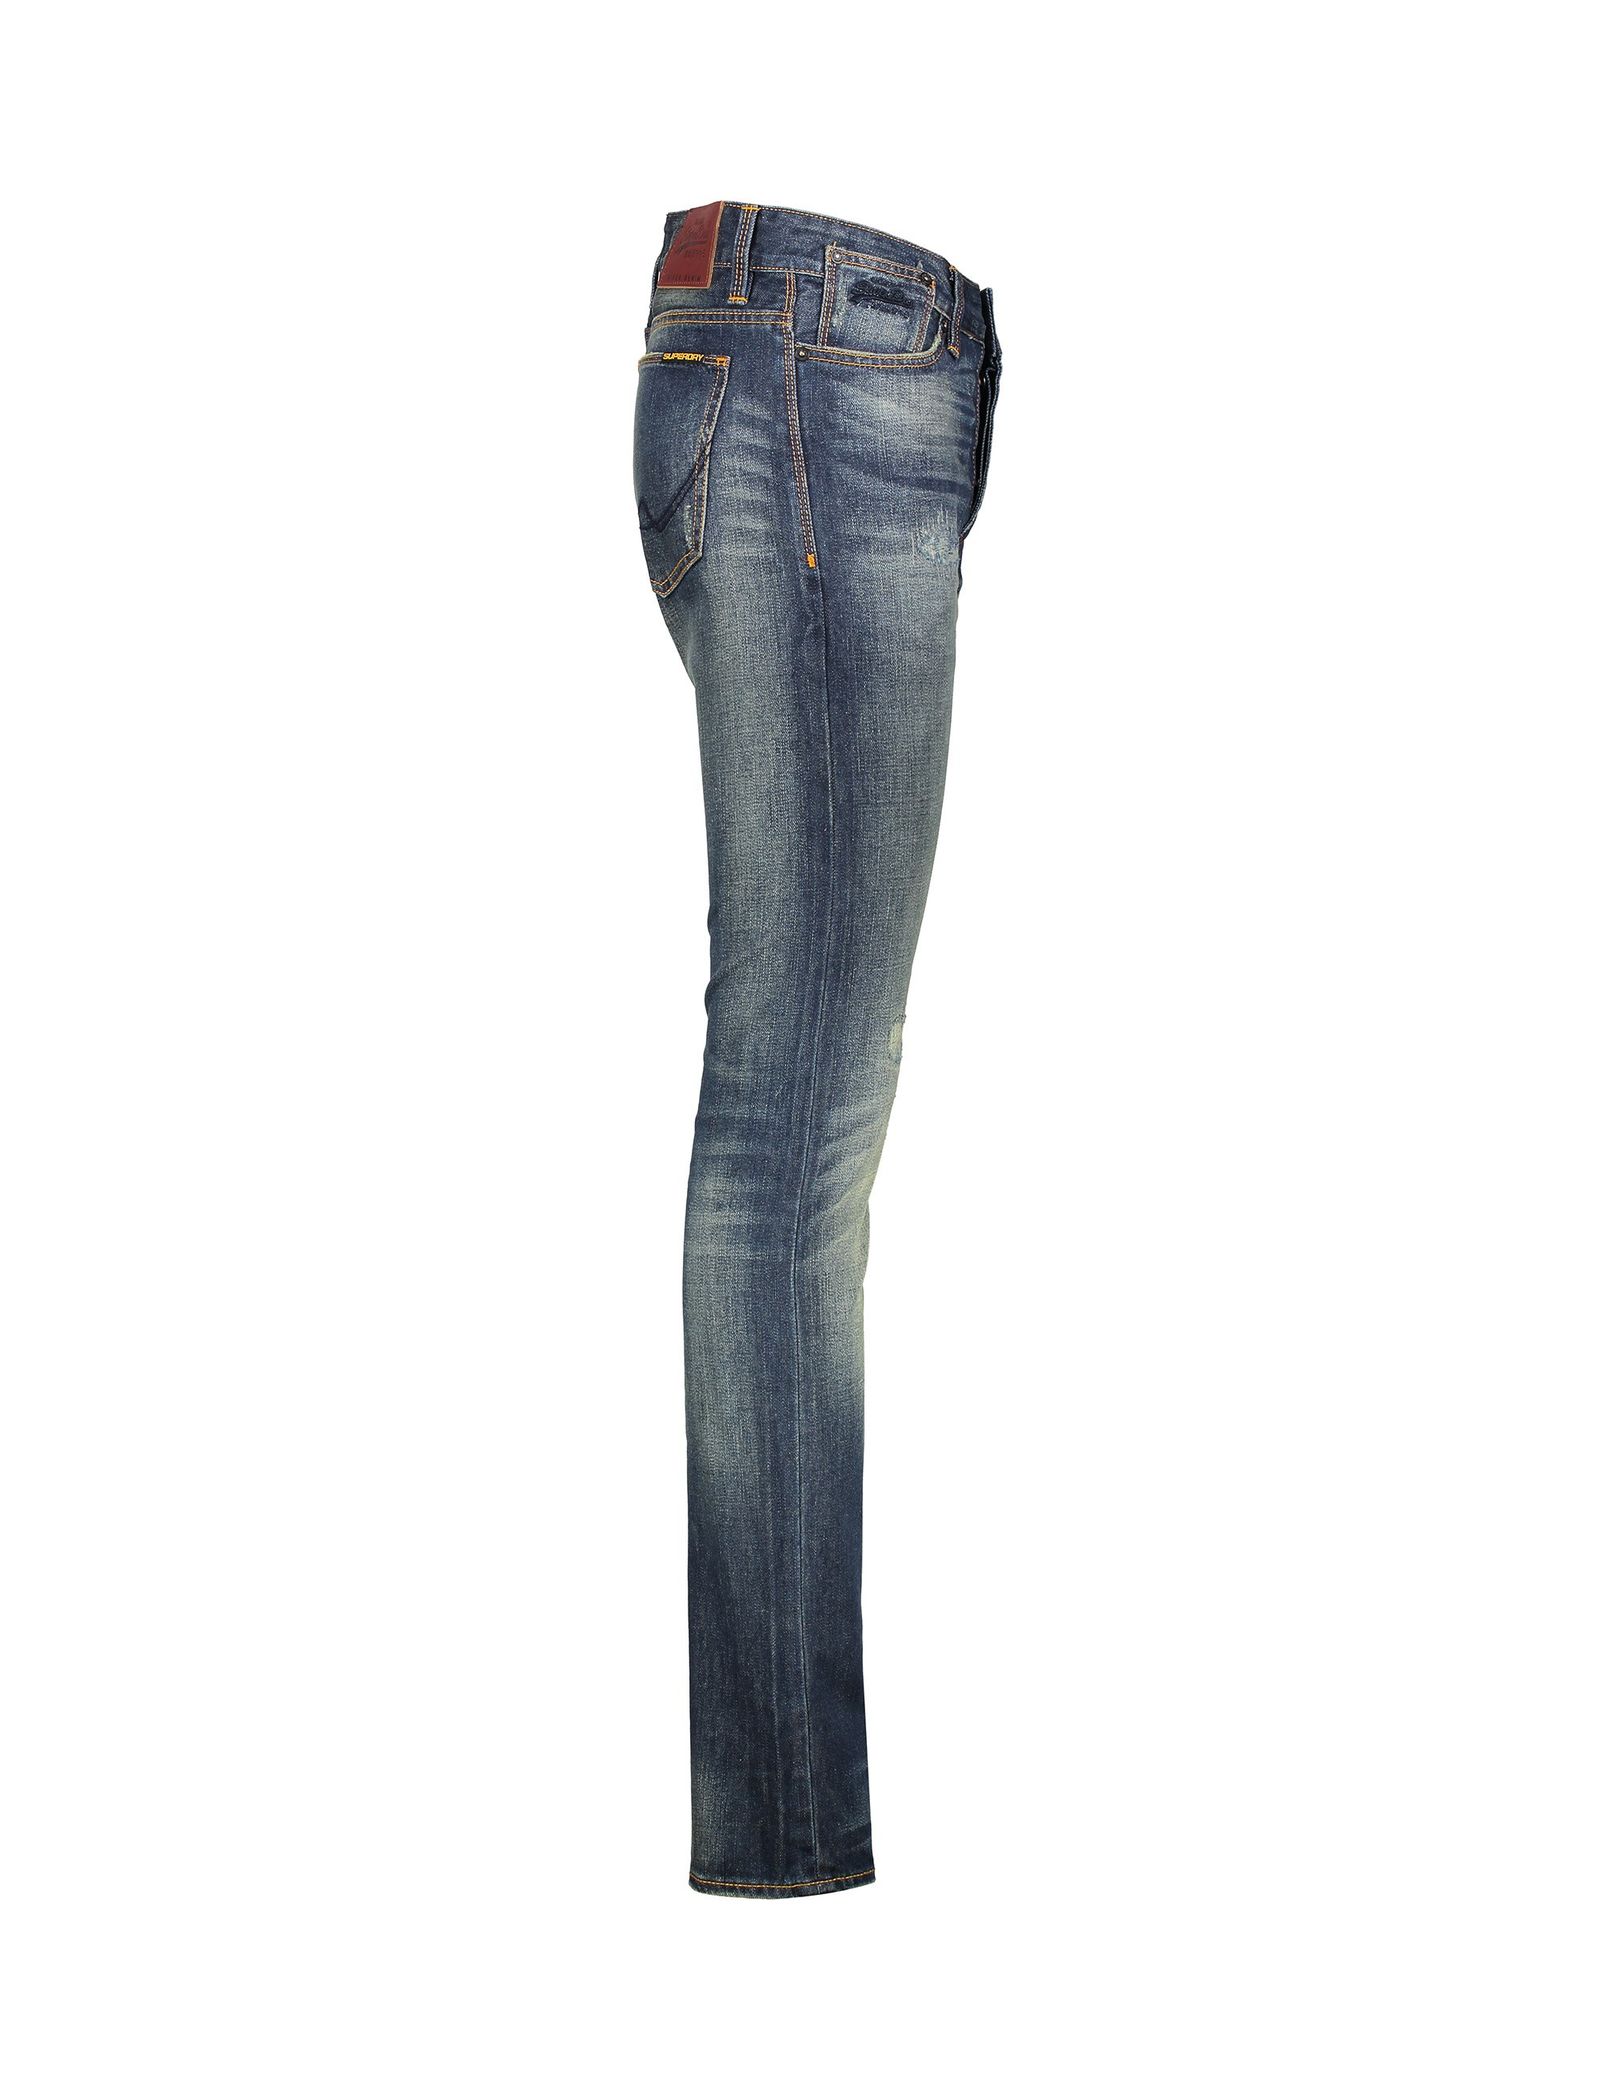 شلوار جین خمره ای مردانه Biker Tapered Jeans - سوپردرای - آبي تيره - 4